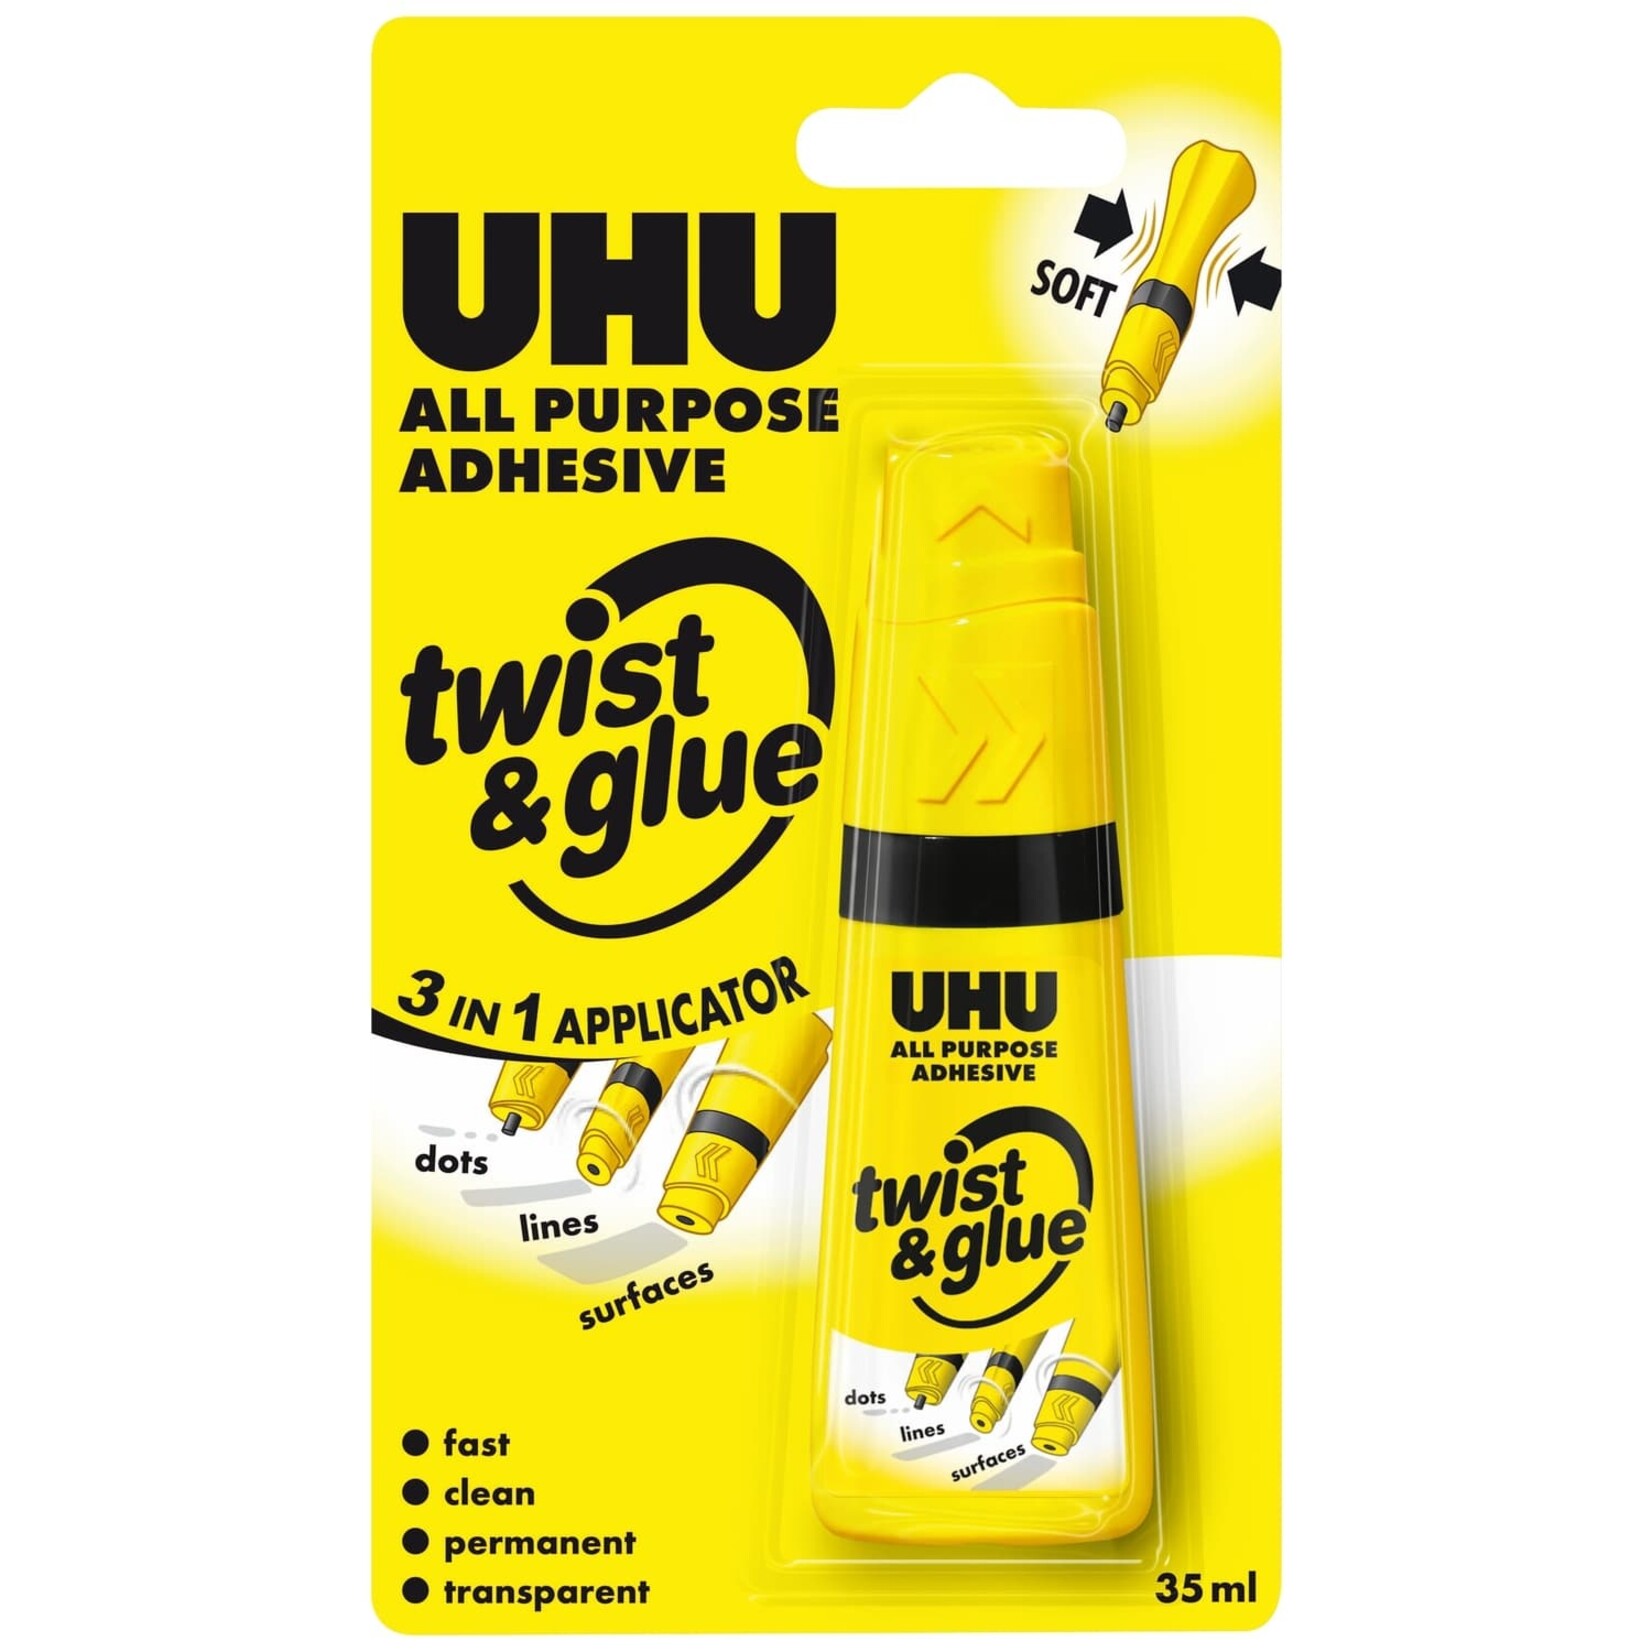 All Purpose Uhu Adhesive Twist & Glue